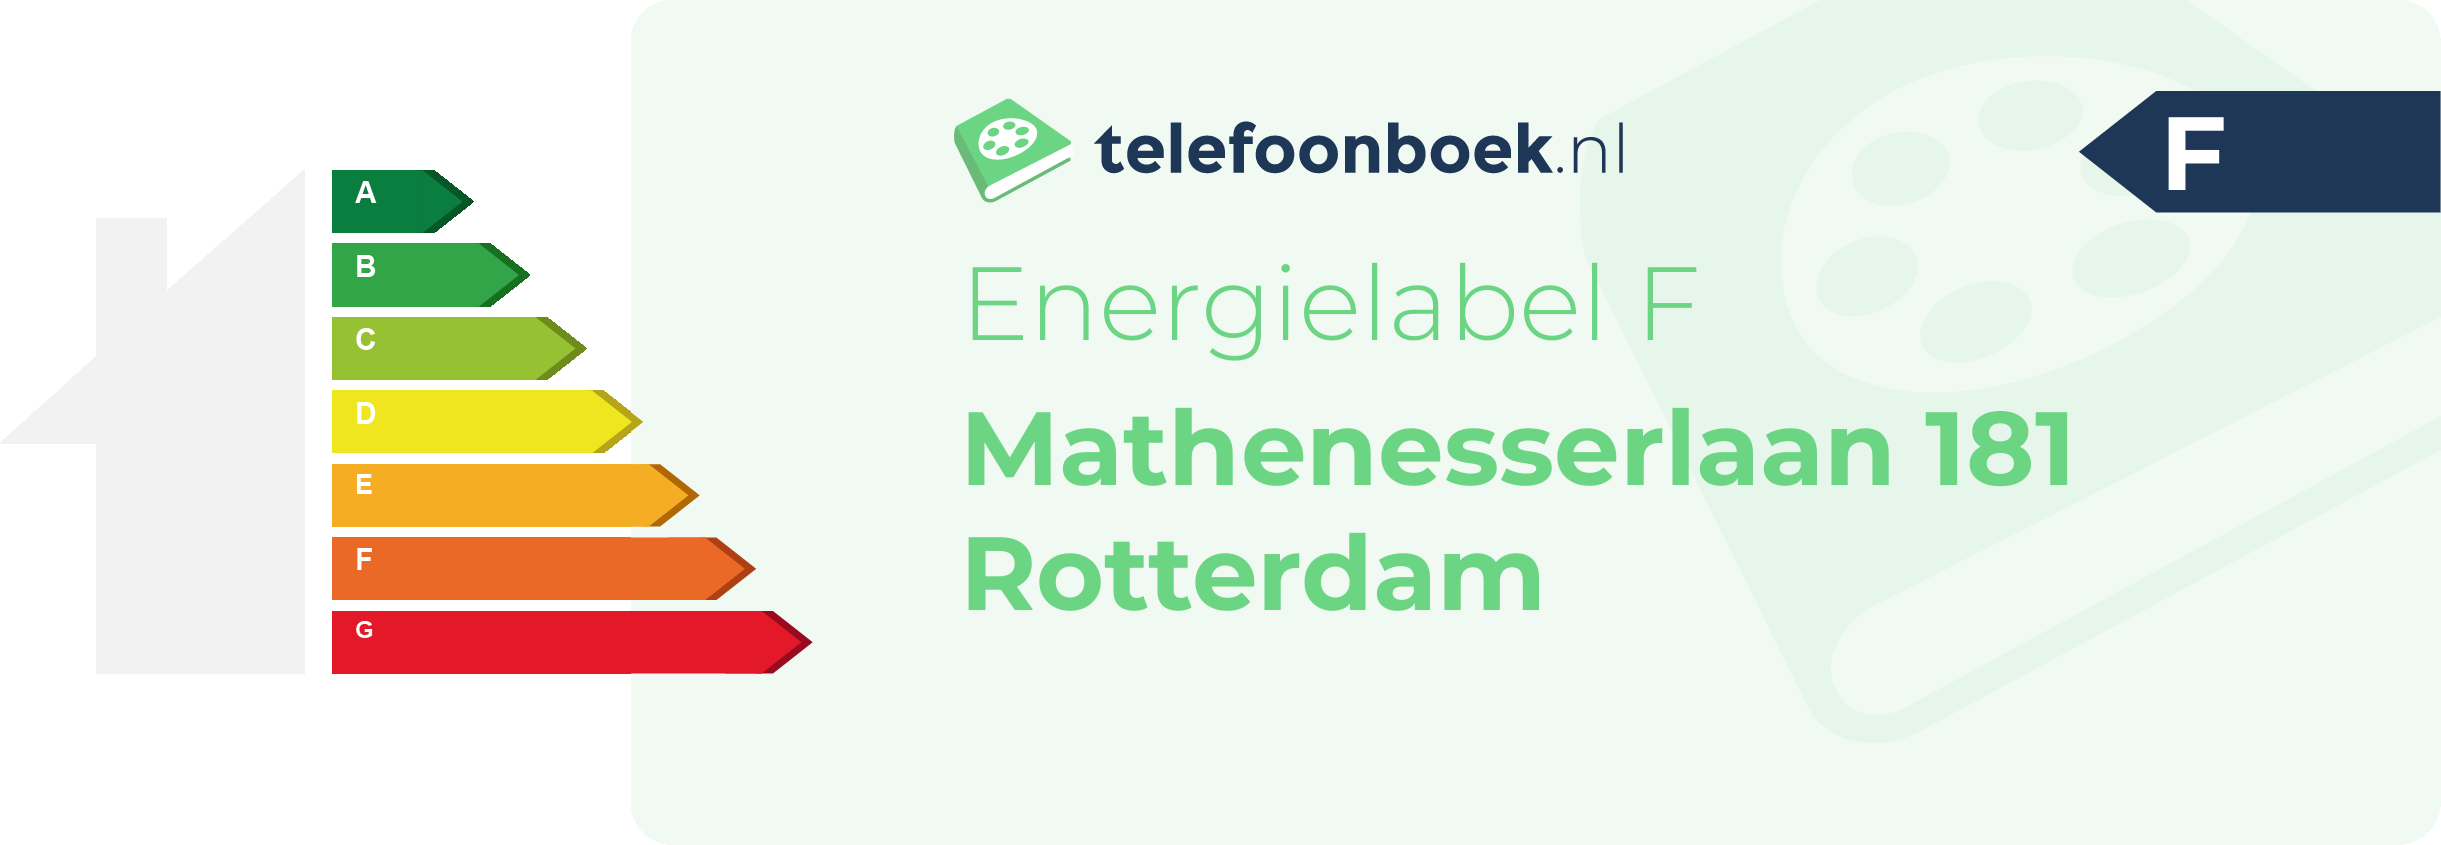 Energielabel Mathenesserlaan 181 Rotterdam